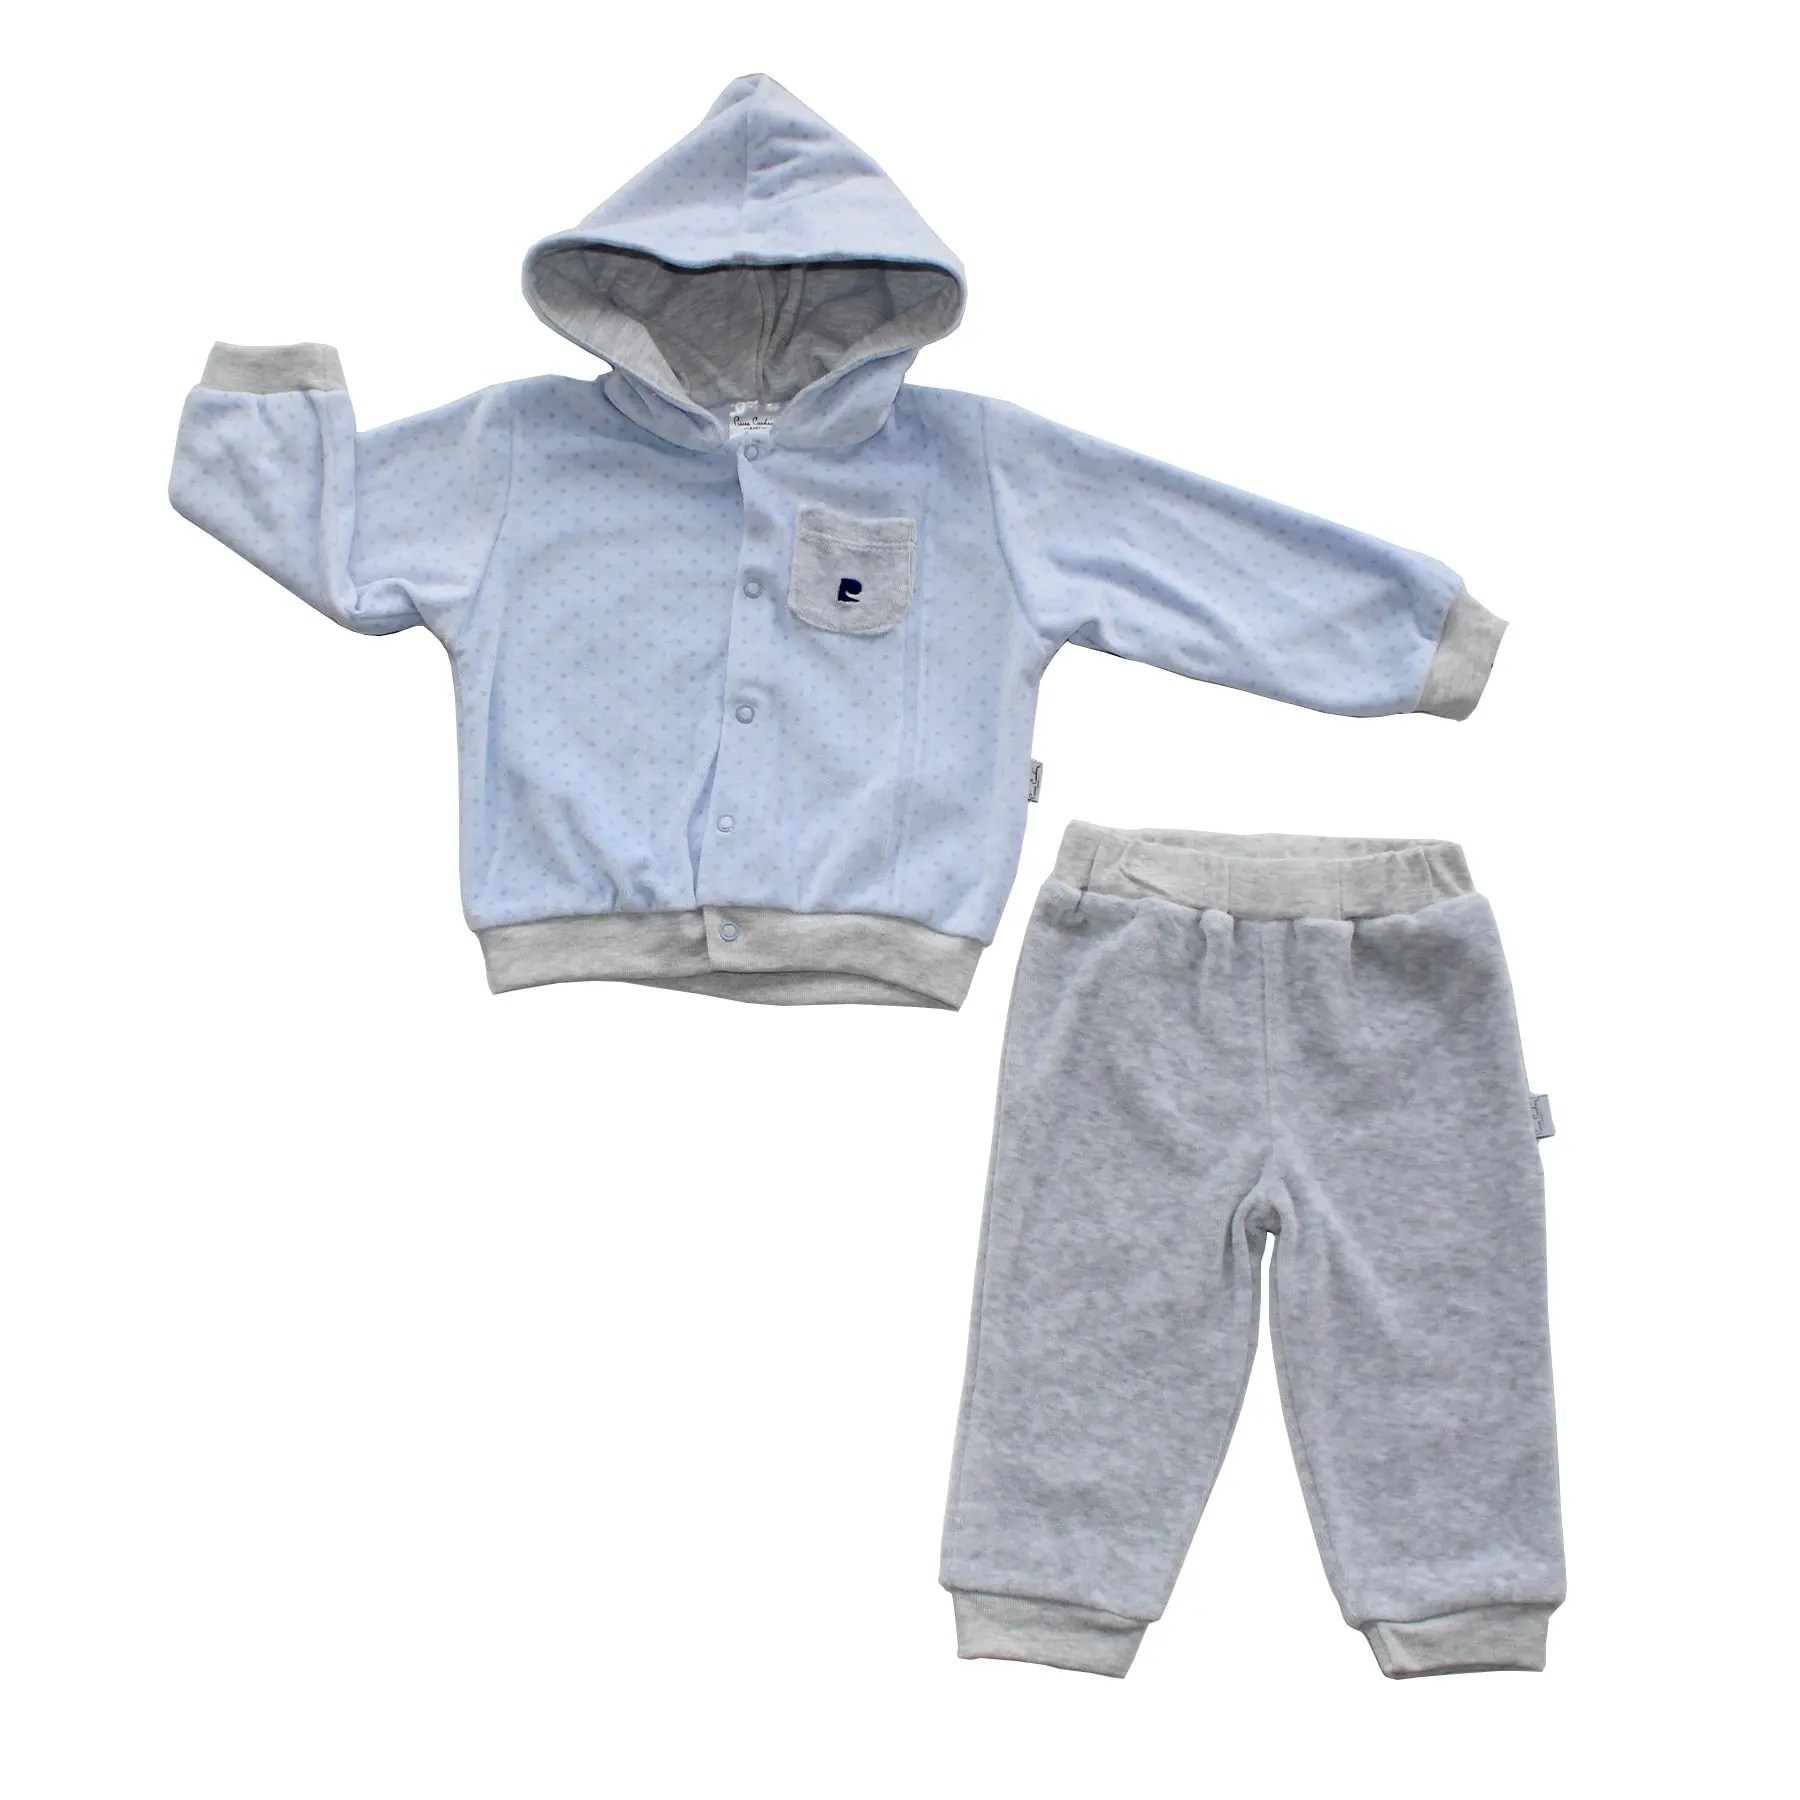 

Pierre Cardin Original Licensed Velvet Hooded Blue Gray Points 2-Piece Set Newborn Baby Boy Cotton Long Sleeve Infanr clothing